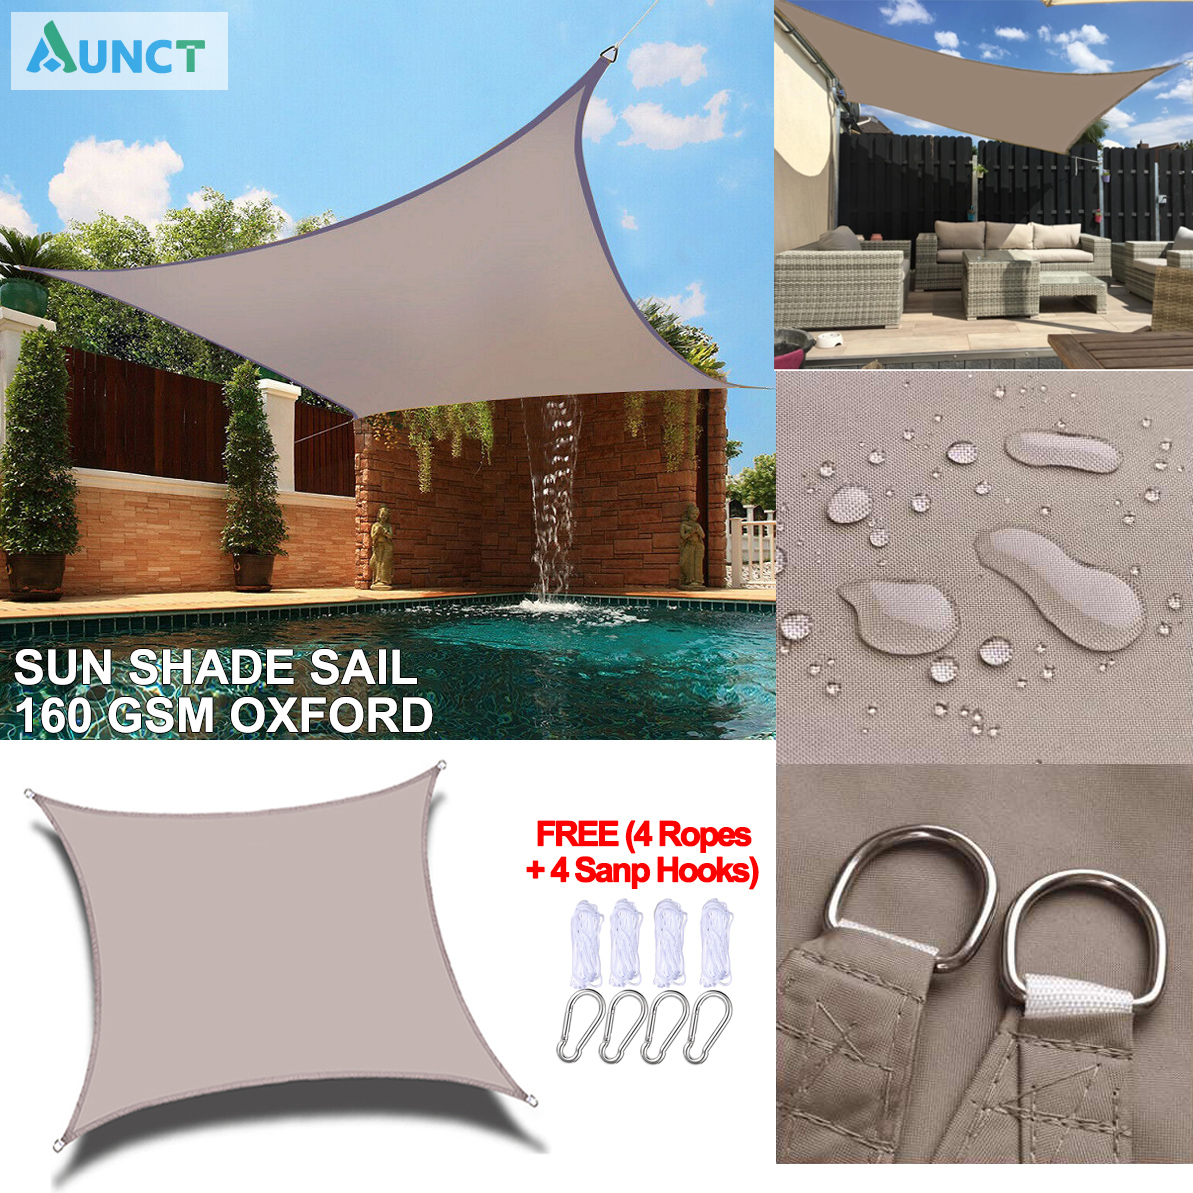 Aunct 5x6m 300D Oxford Squre Sun Shade sail visor pool cover Sunscreen awnings outdoor waterproof sail shade cloth gazebo canopy